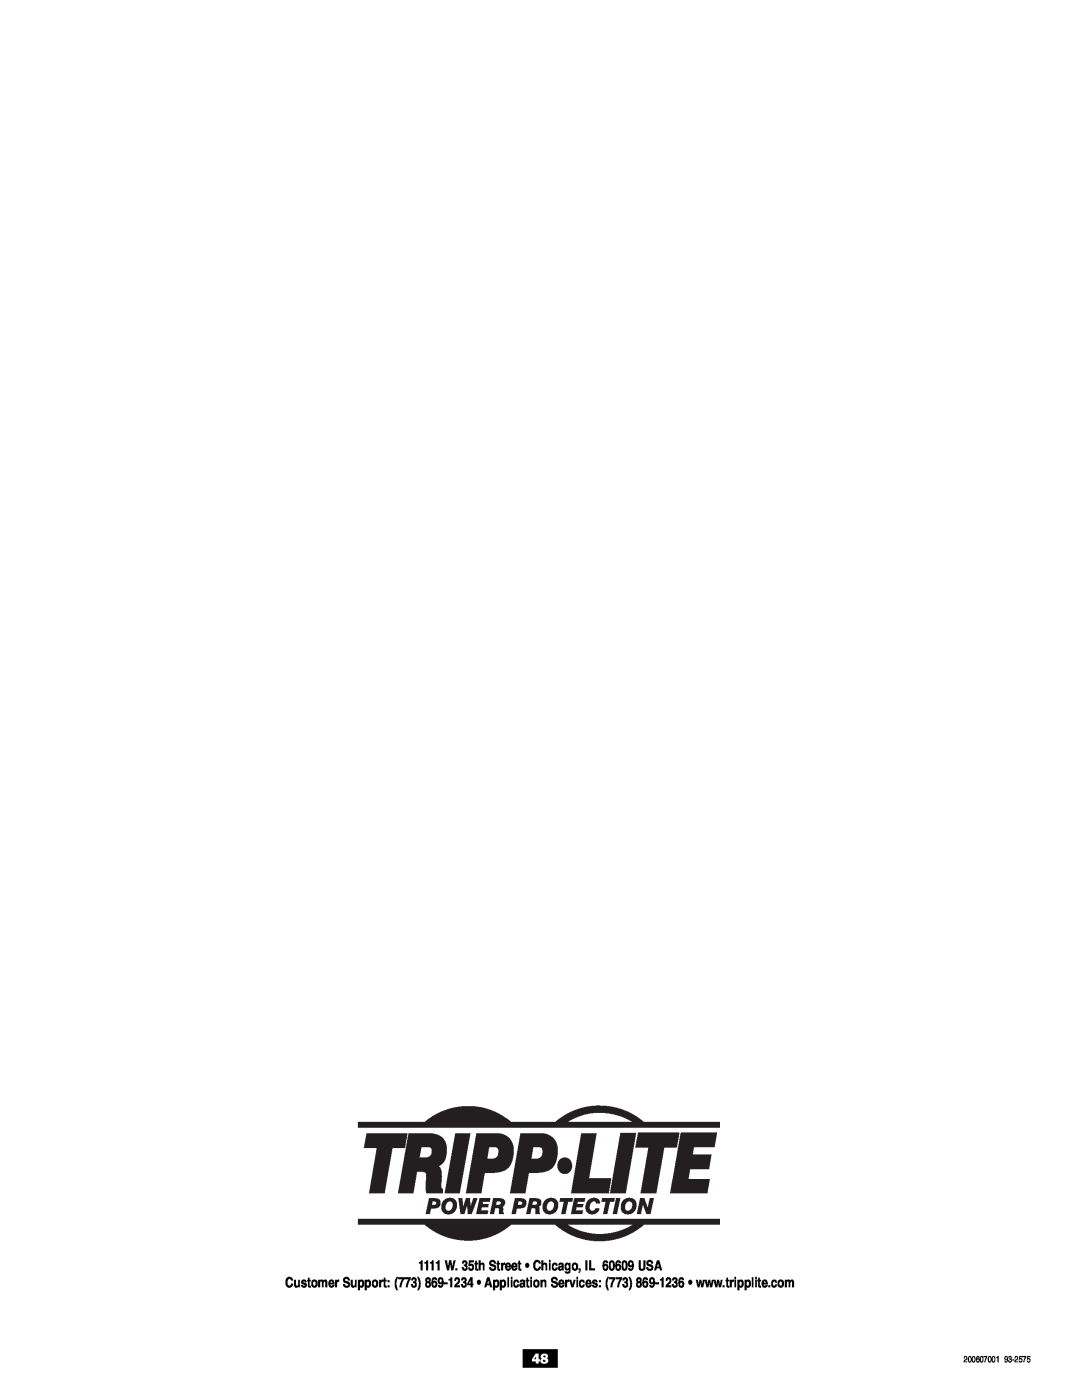 Tripp Lite Single-Phase 7.5kVA, Single-Phase 10kVA owner manual 1111 W. 35th Street Chicago, IL 60609 USA, 200607001 